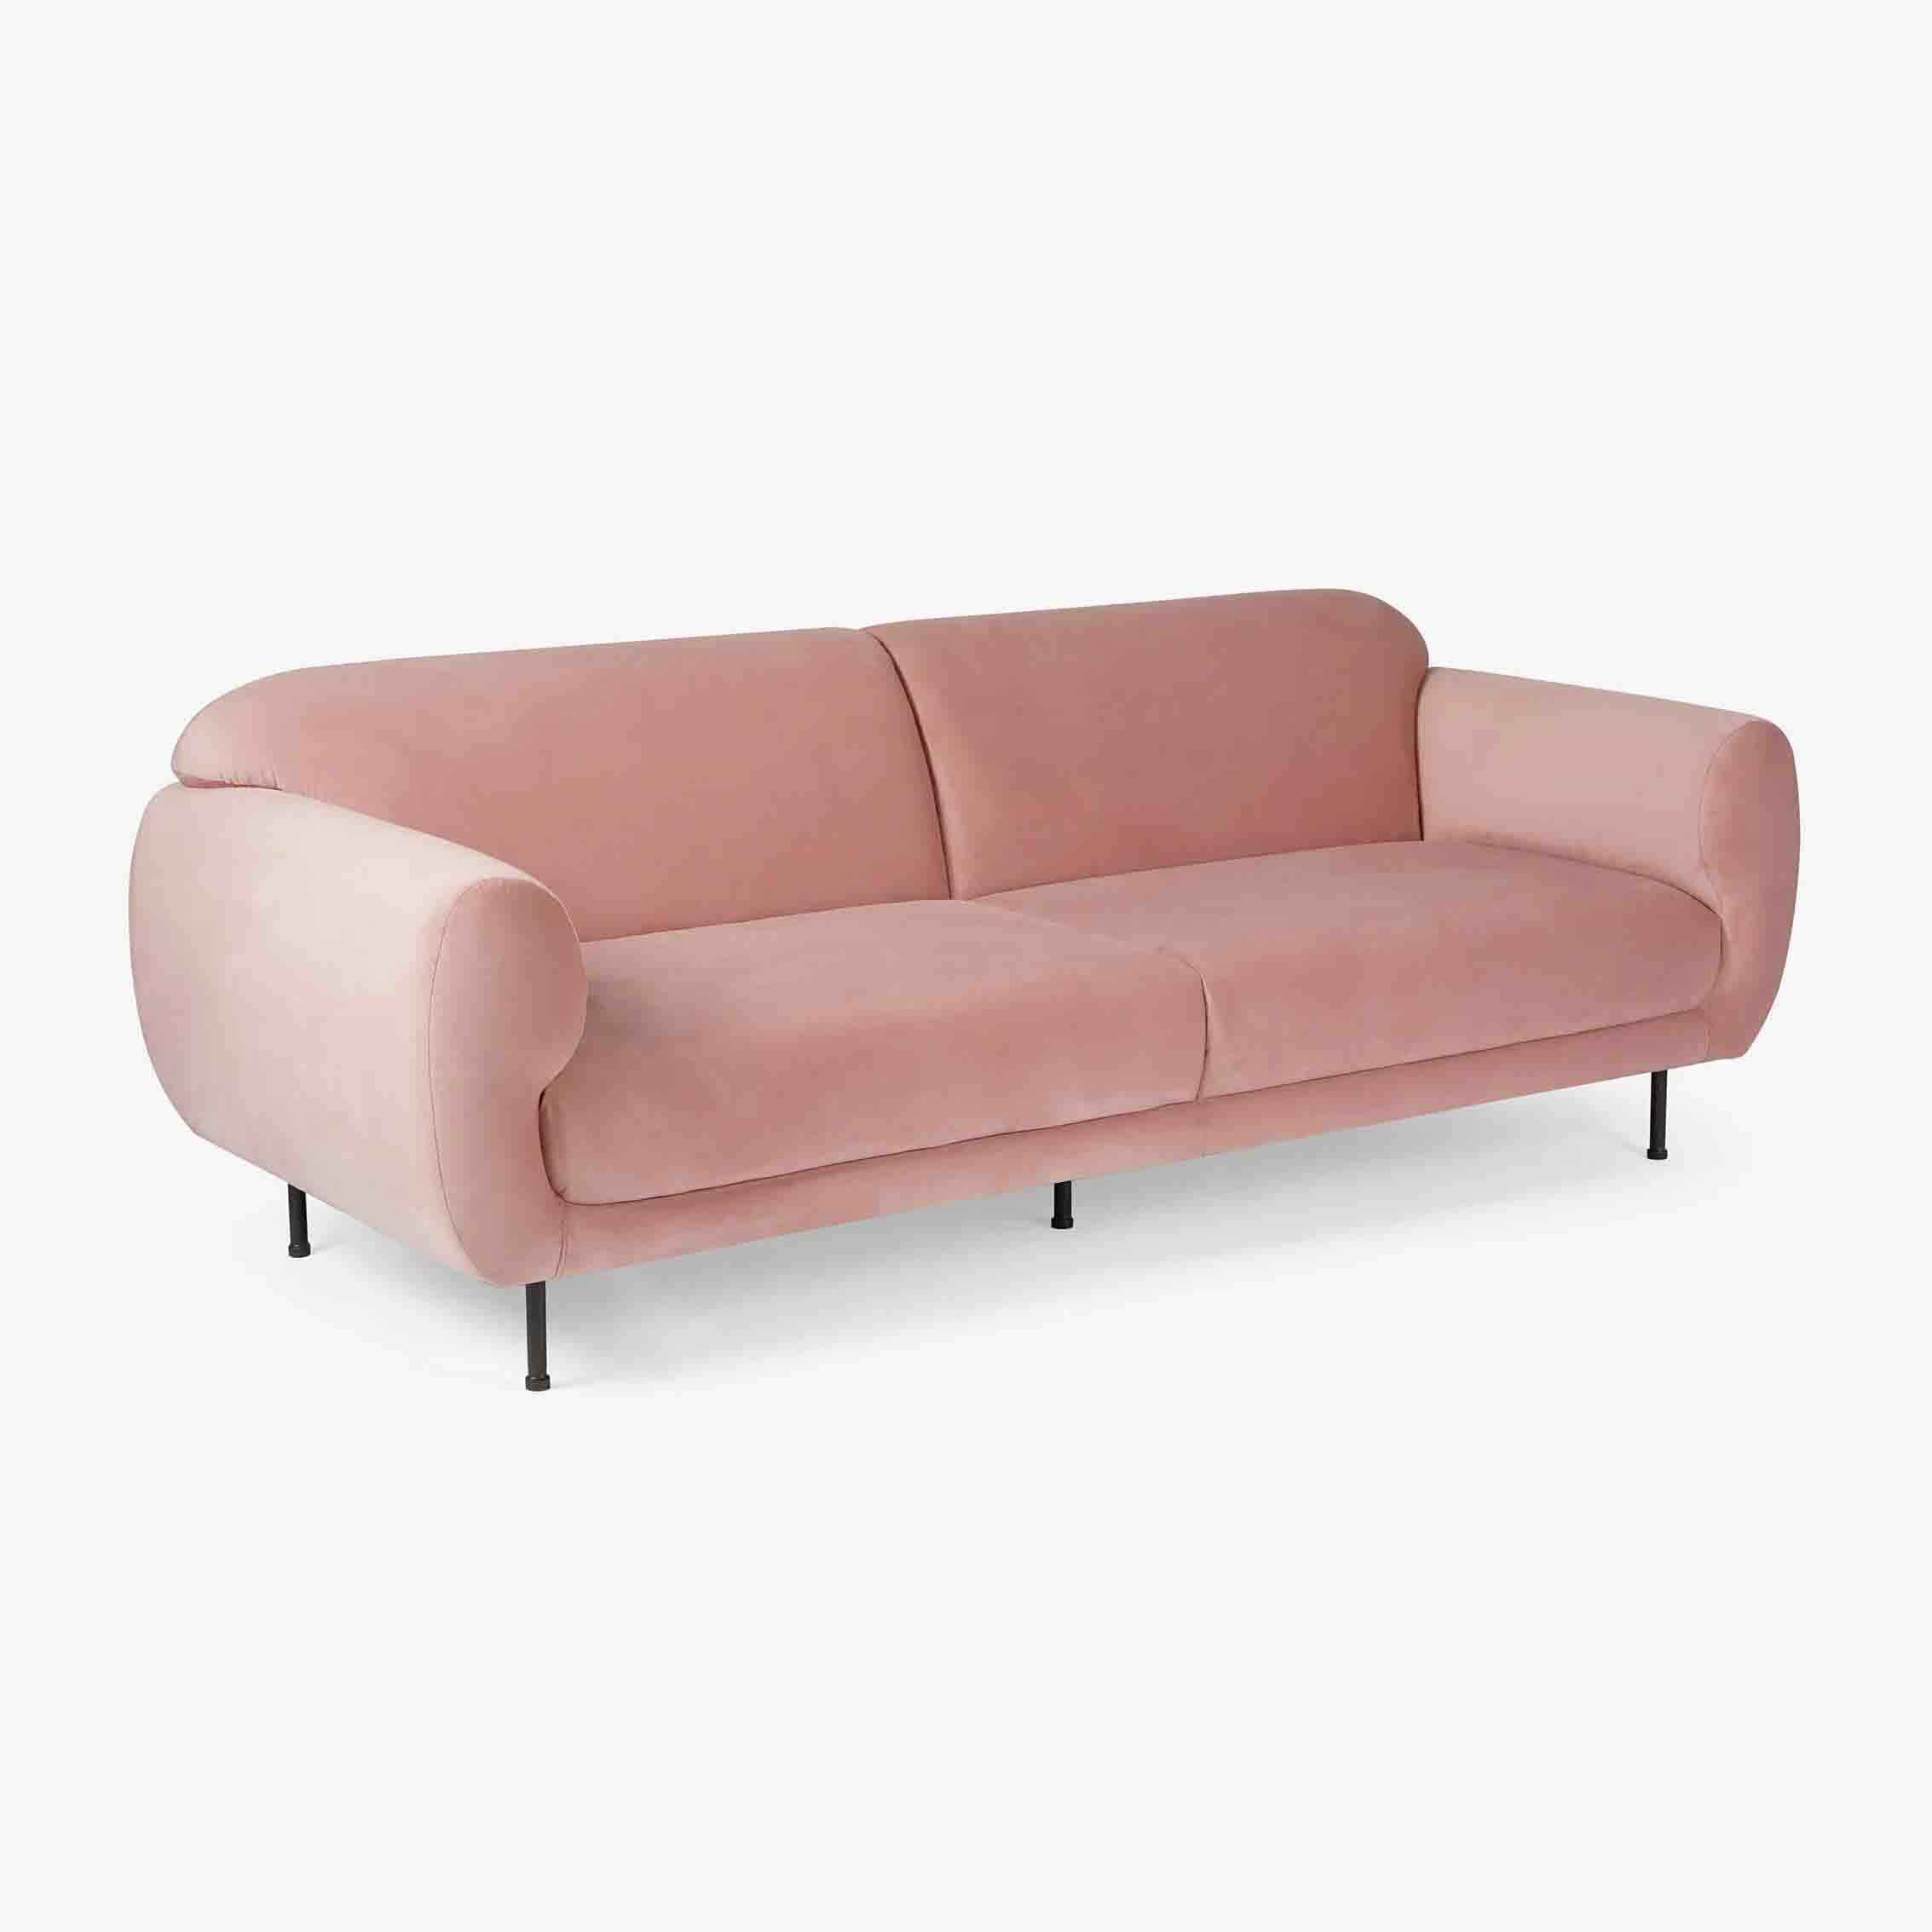 Hamilton Chaise Sectional Sofa